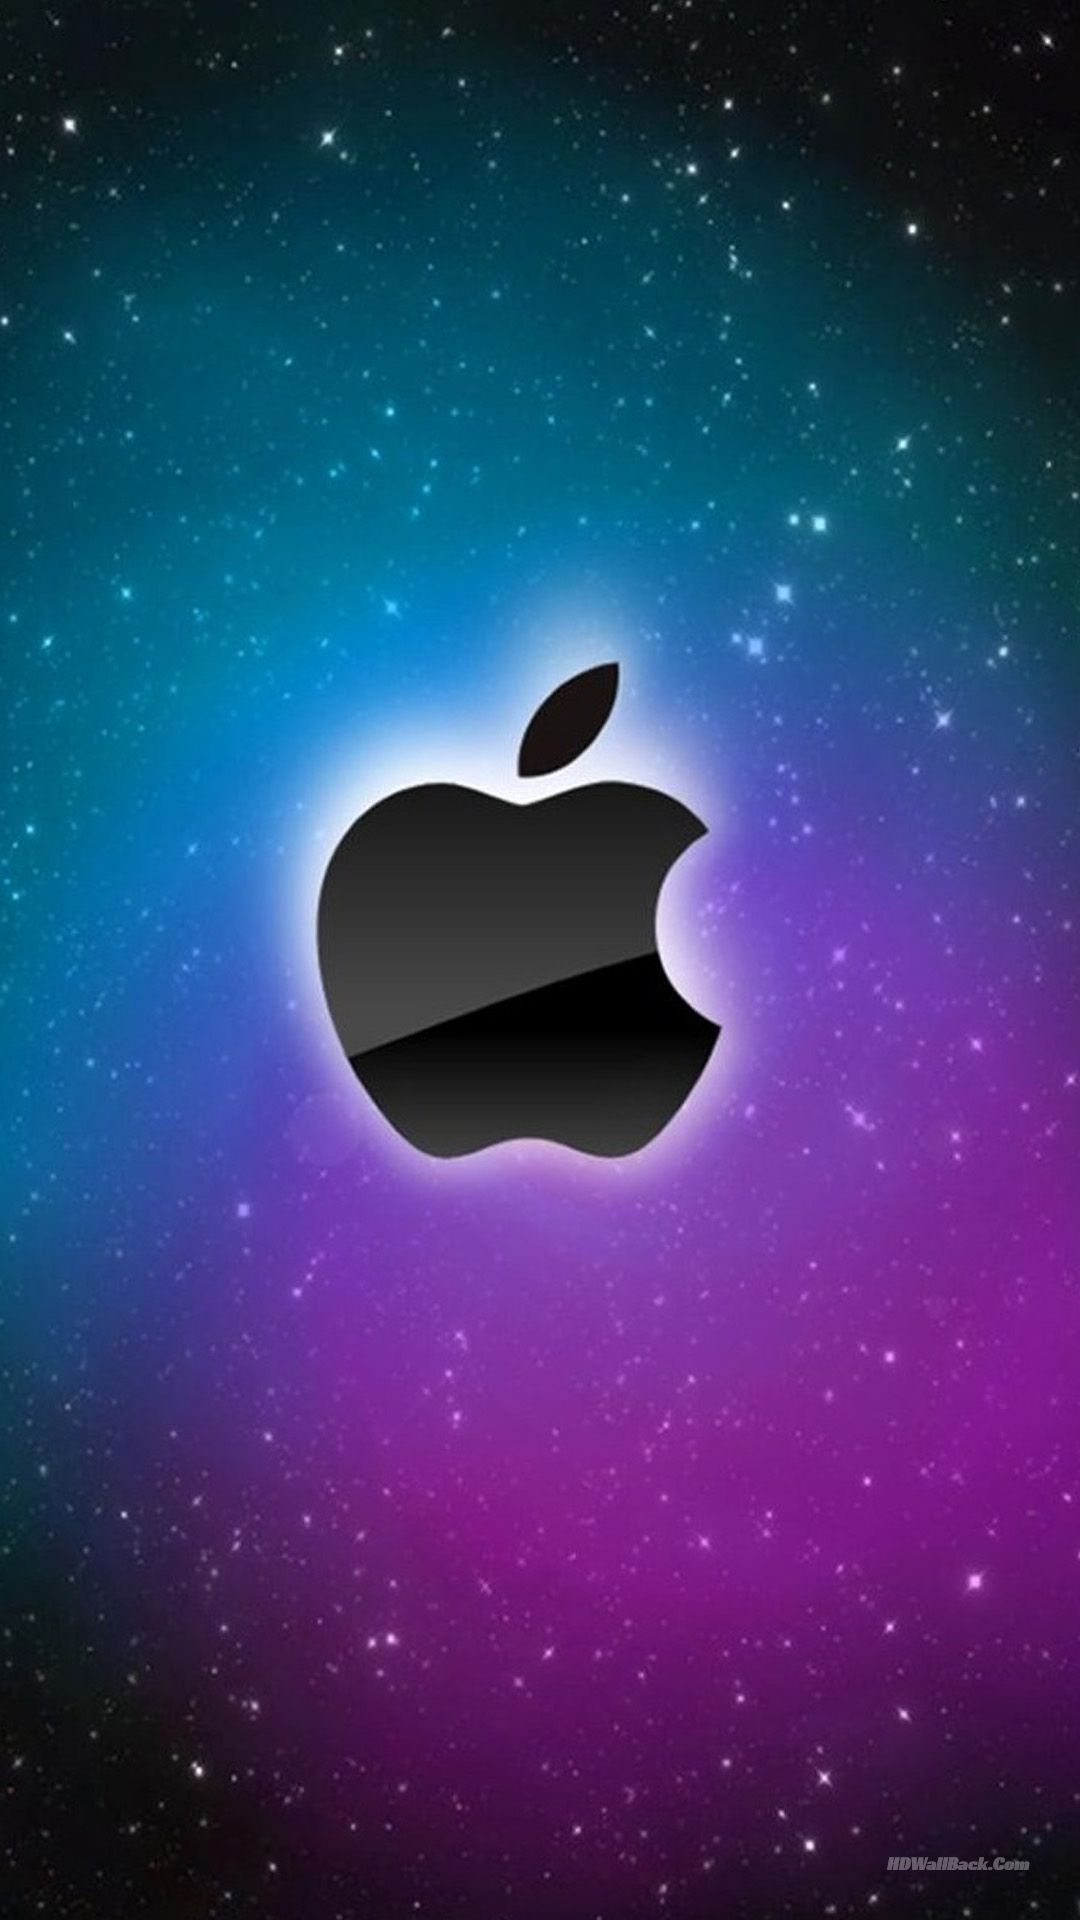 apple iphone 6 wallpaper download hd